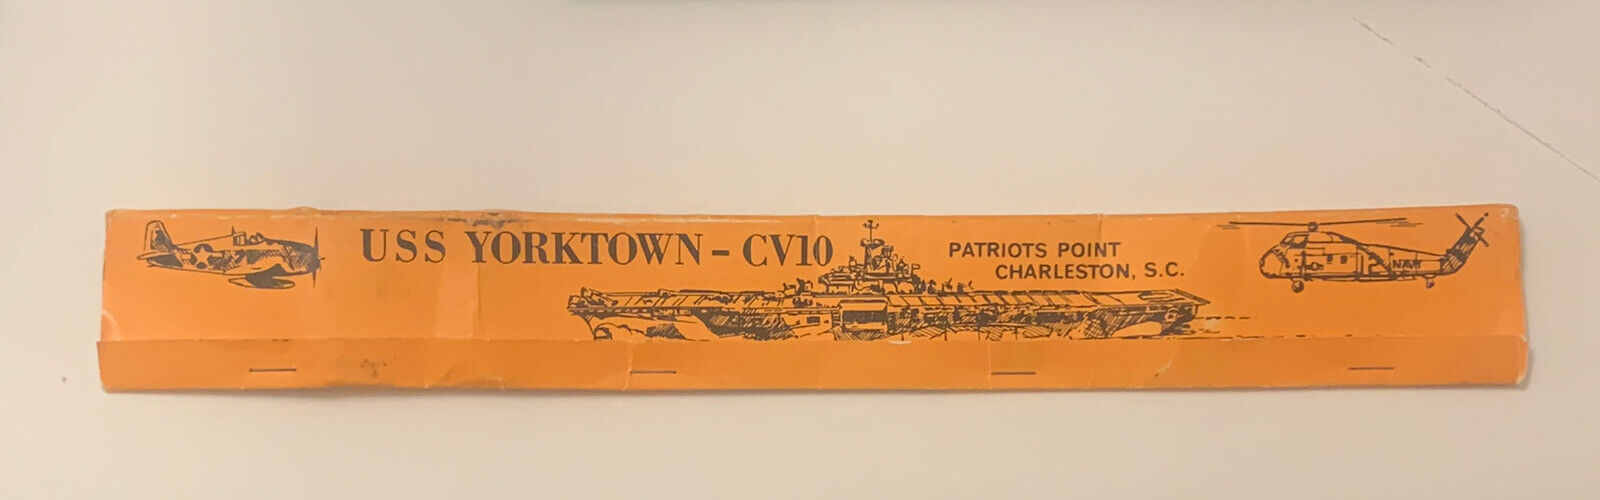 Vintage Worlds Largest Matchbook Full Unstruck Ad Matches USS Yorktown-CV10